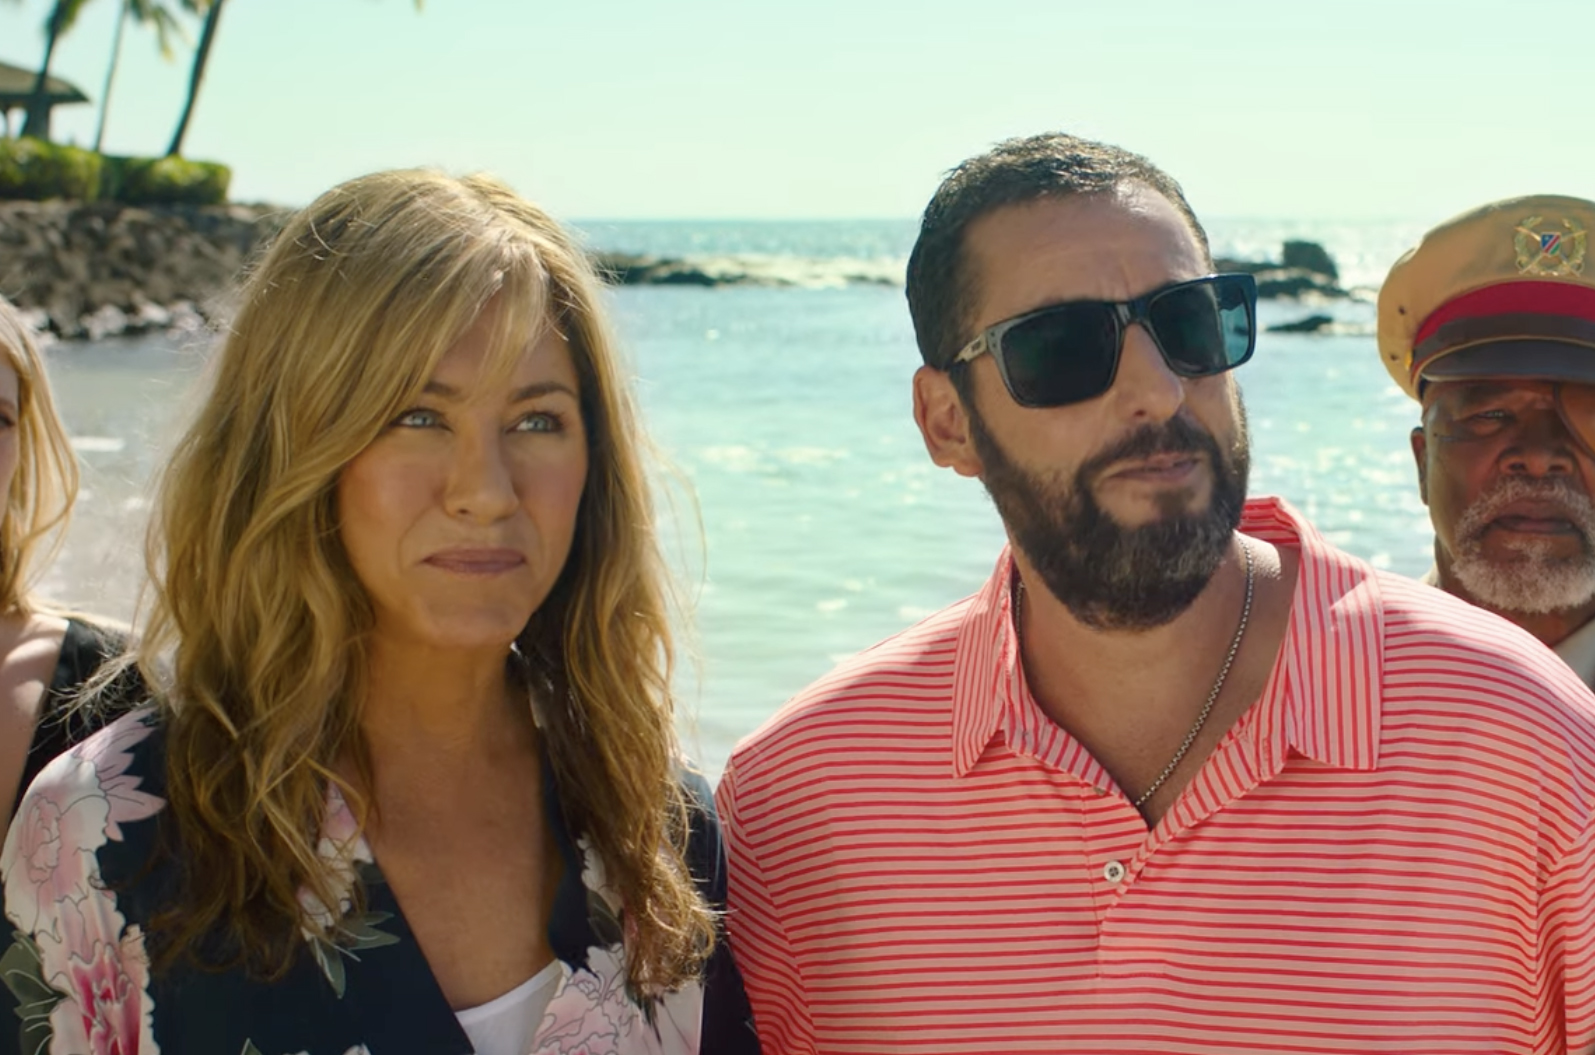 Where Was 'Murder Mystery 2' Filmed? Adam Sandler and Jennifer Aniston's  Netflix Movie Travelled the World